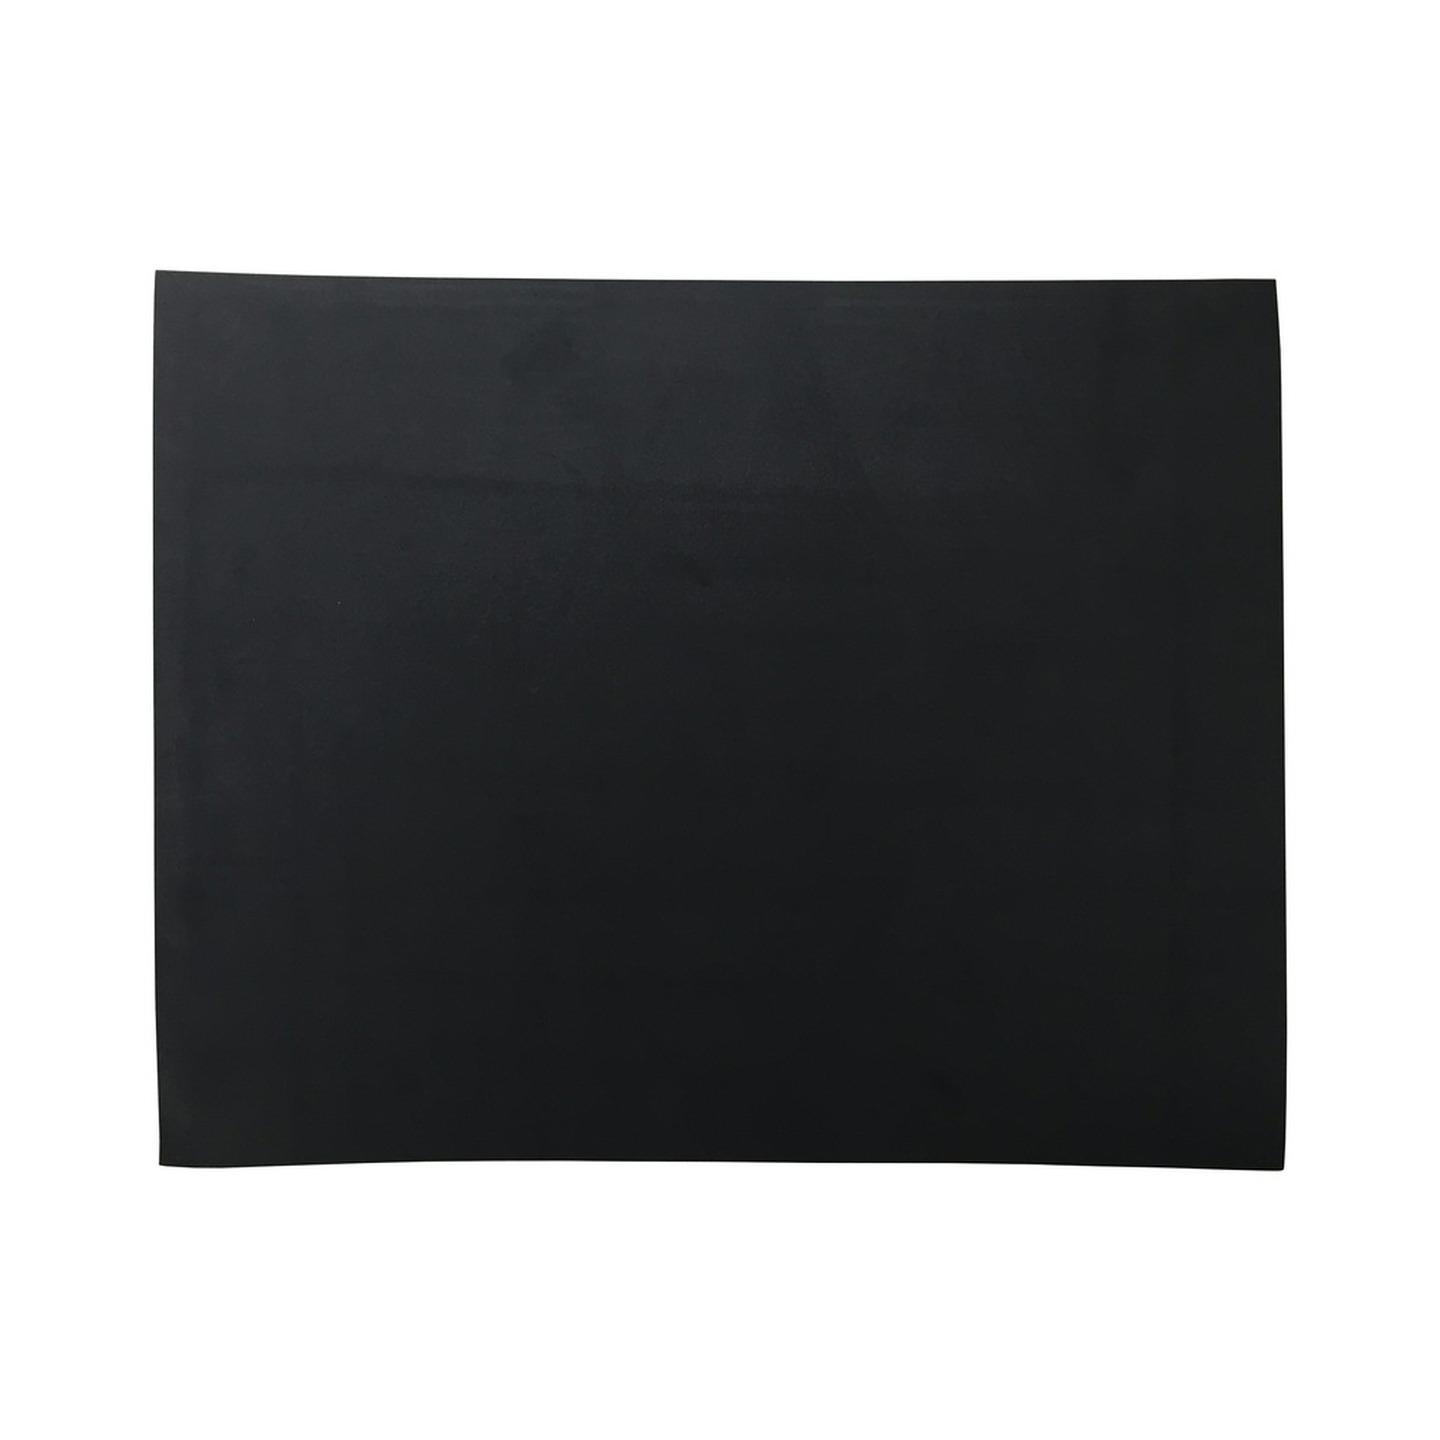 5mm Black EVA Foam Sheet 50cm x 40cm